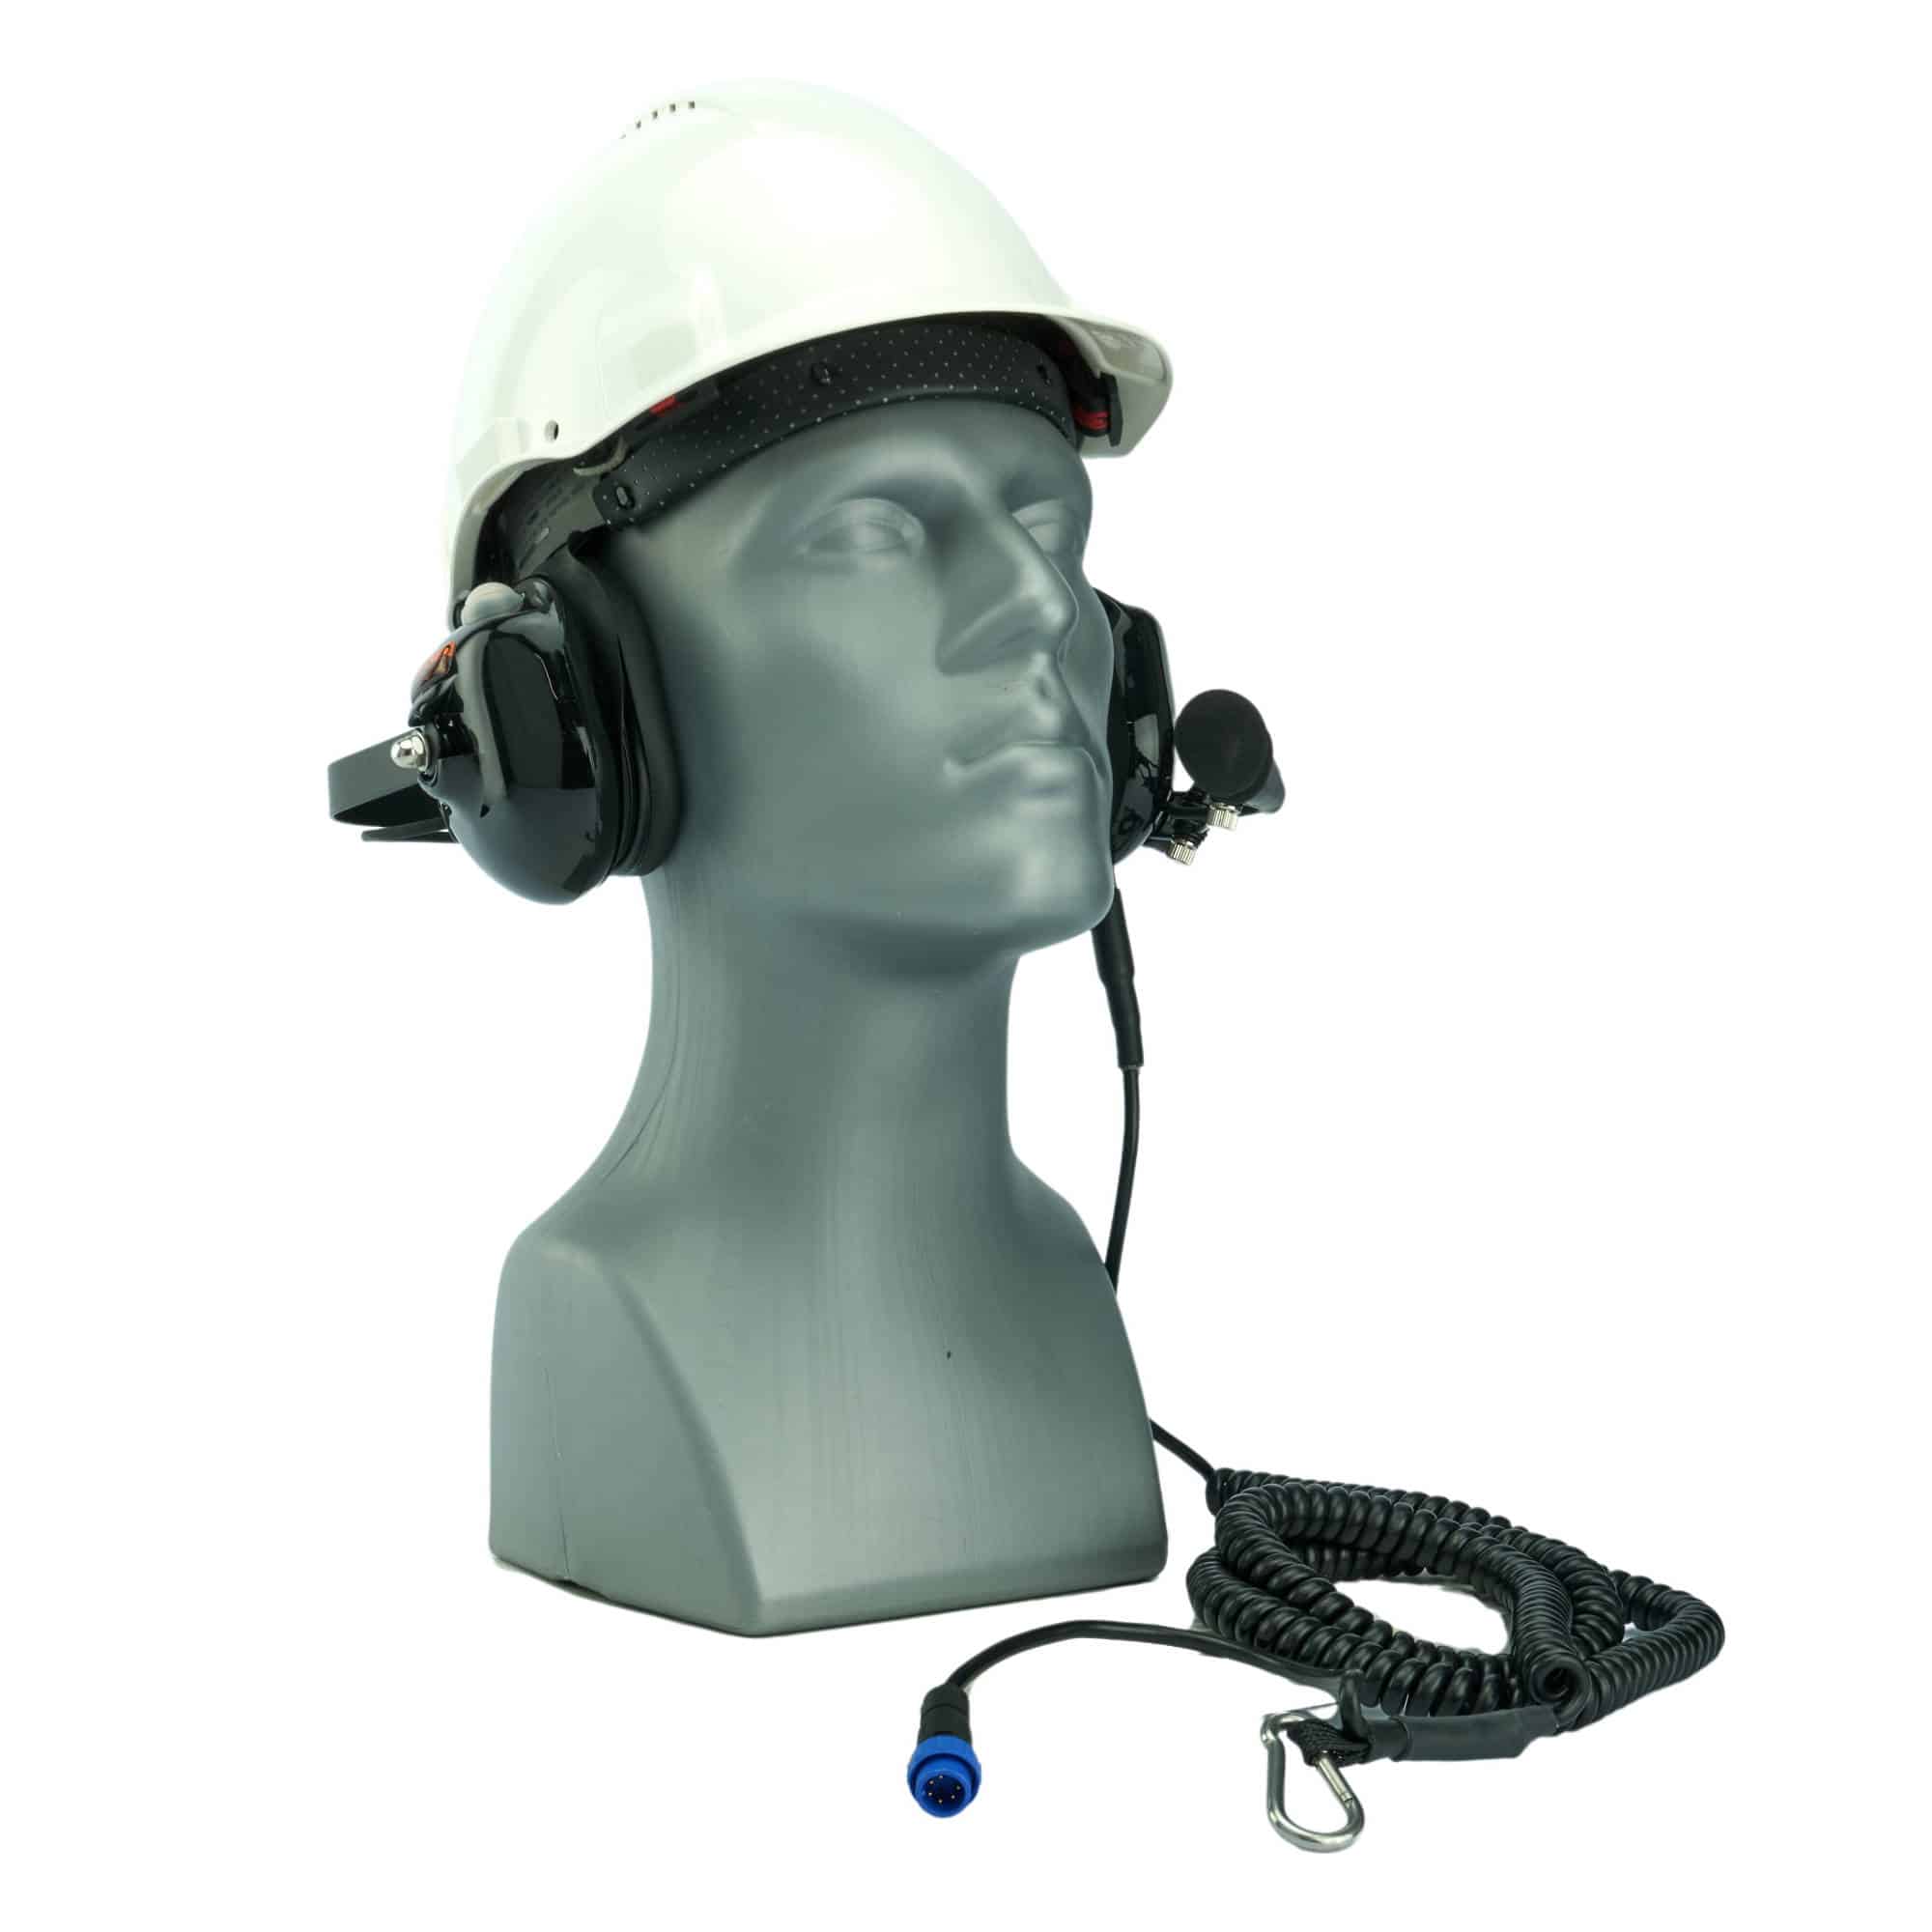 NSHEADSET1 - Noise-canceling headset - bulgin MAIN2